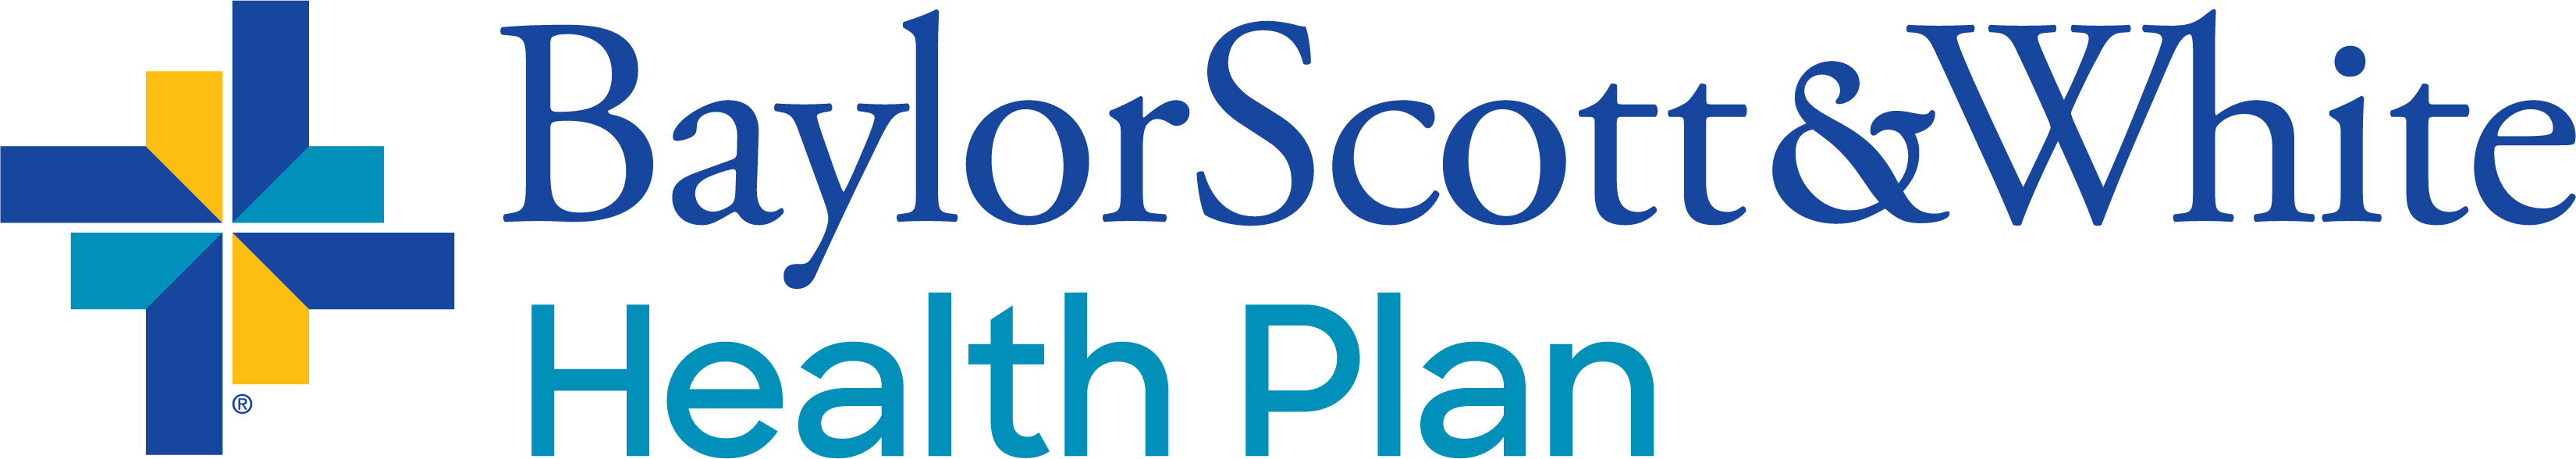 Baylor Scott & White Health Plan logo